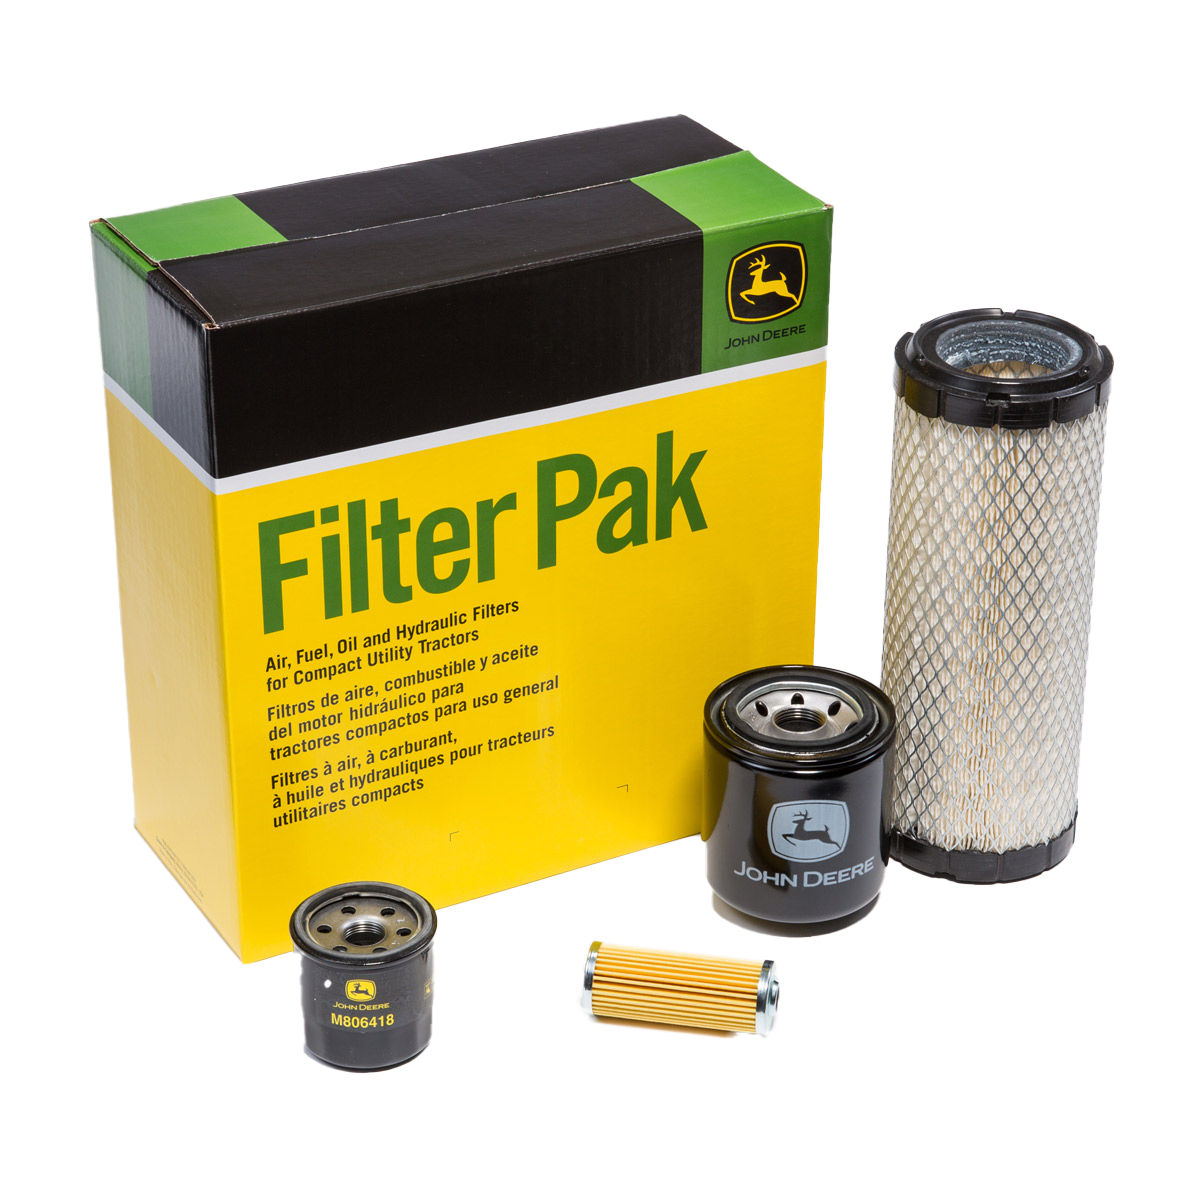 John Deere Filter Paks